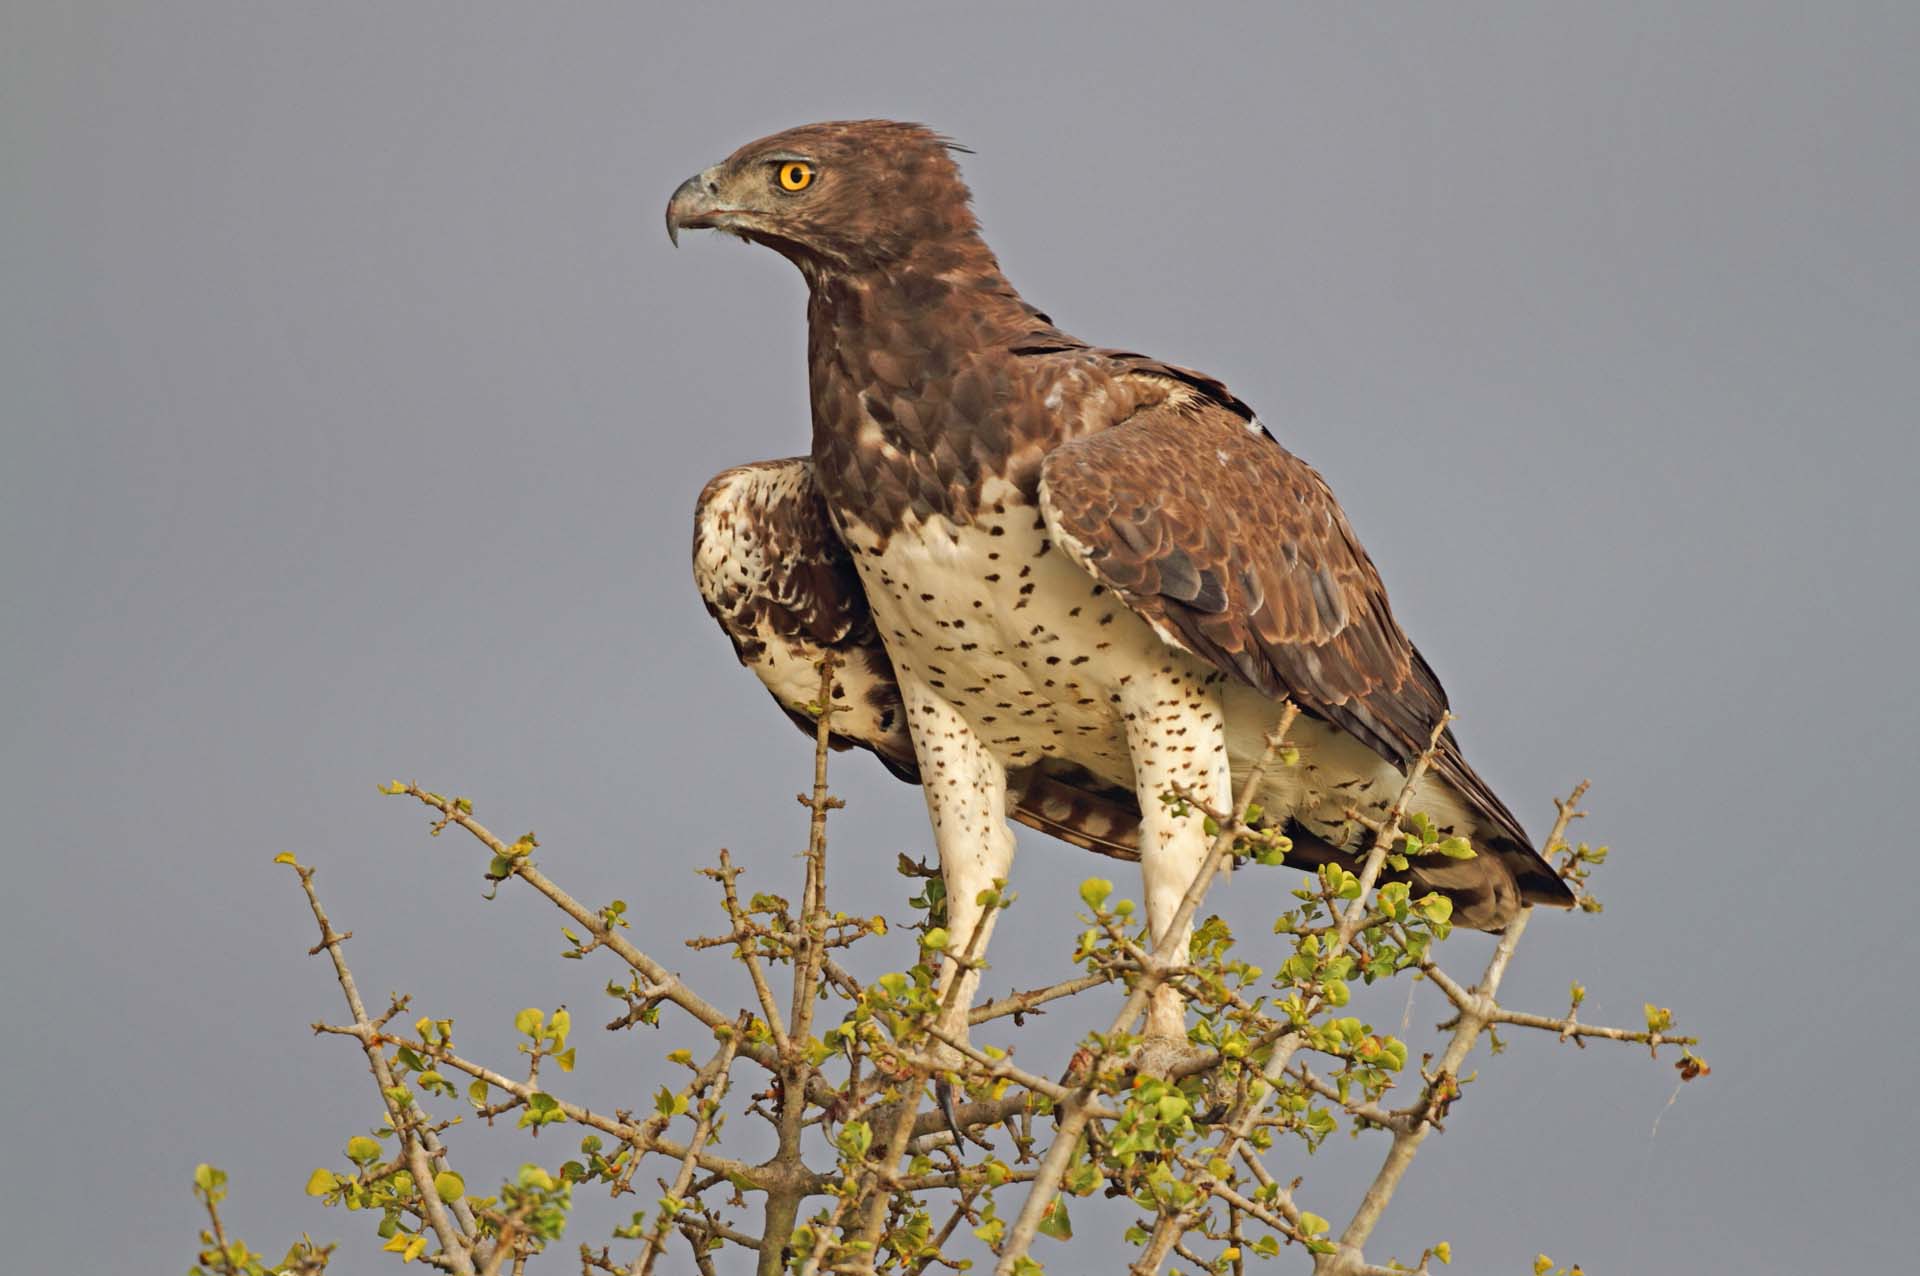 Aigle martial - Réserve nationale de Masai Mara - Kenya - Afrique - Martial eagle - Masai Mara National Reserve - Kenya - Africa - Polemaetus bellicosus